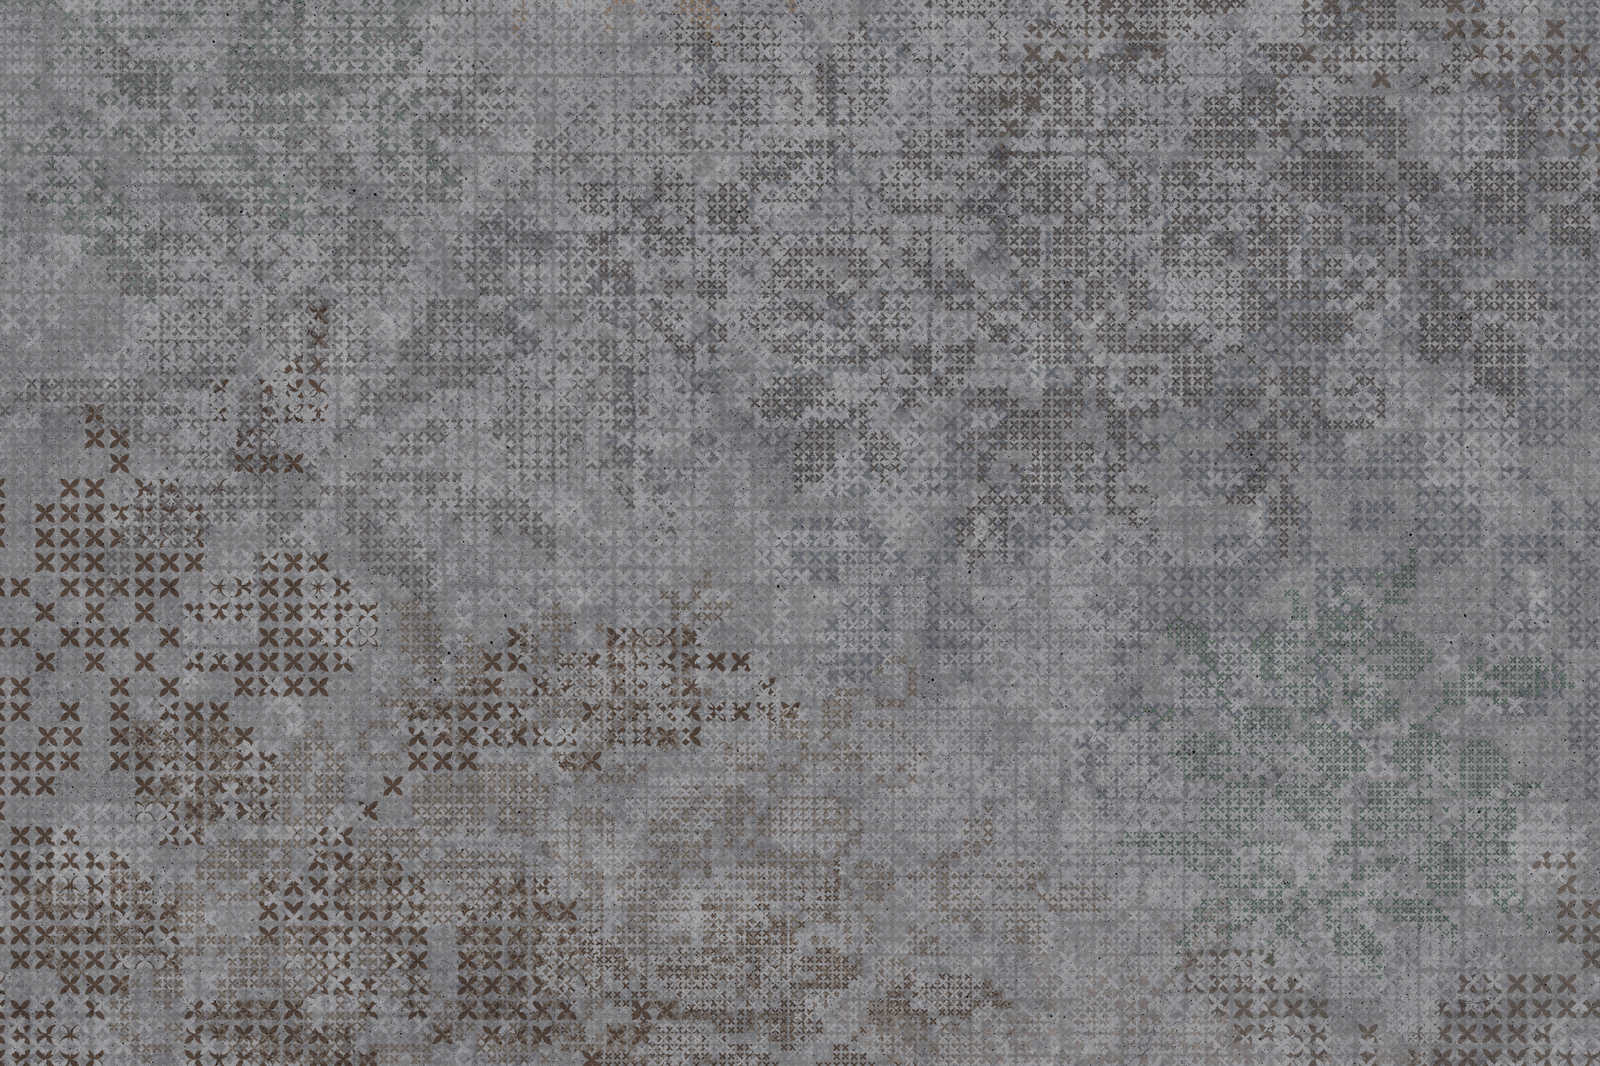             Leinwandbild Kreuz Muster im Pixel-Stil – 0,90 m x 0,60 m
        